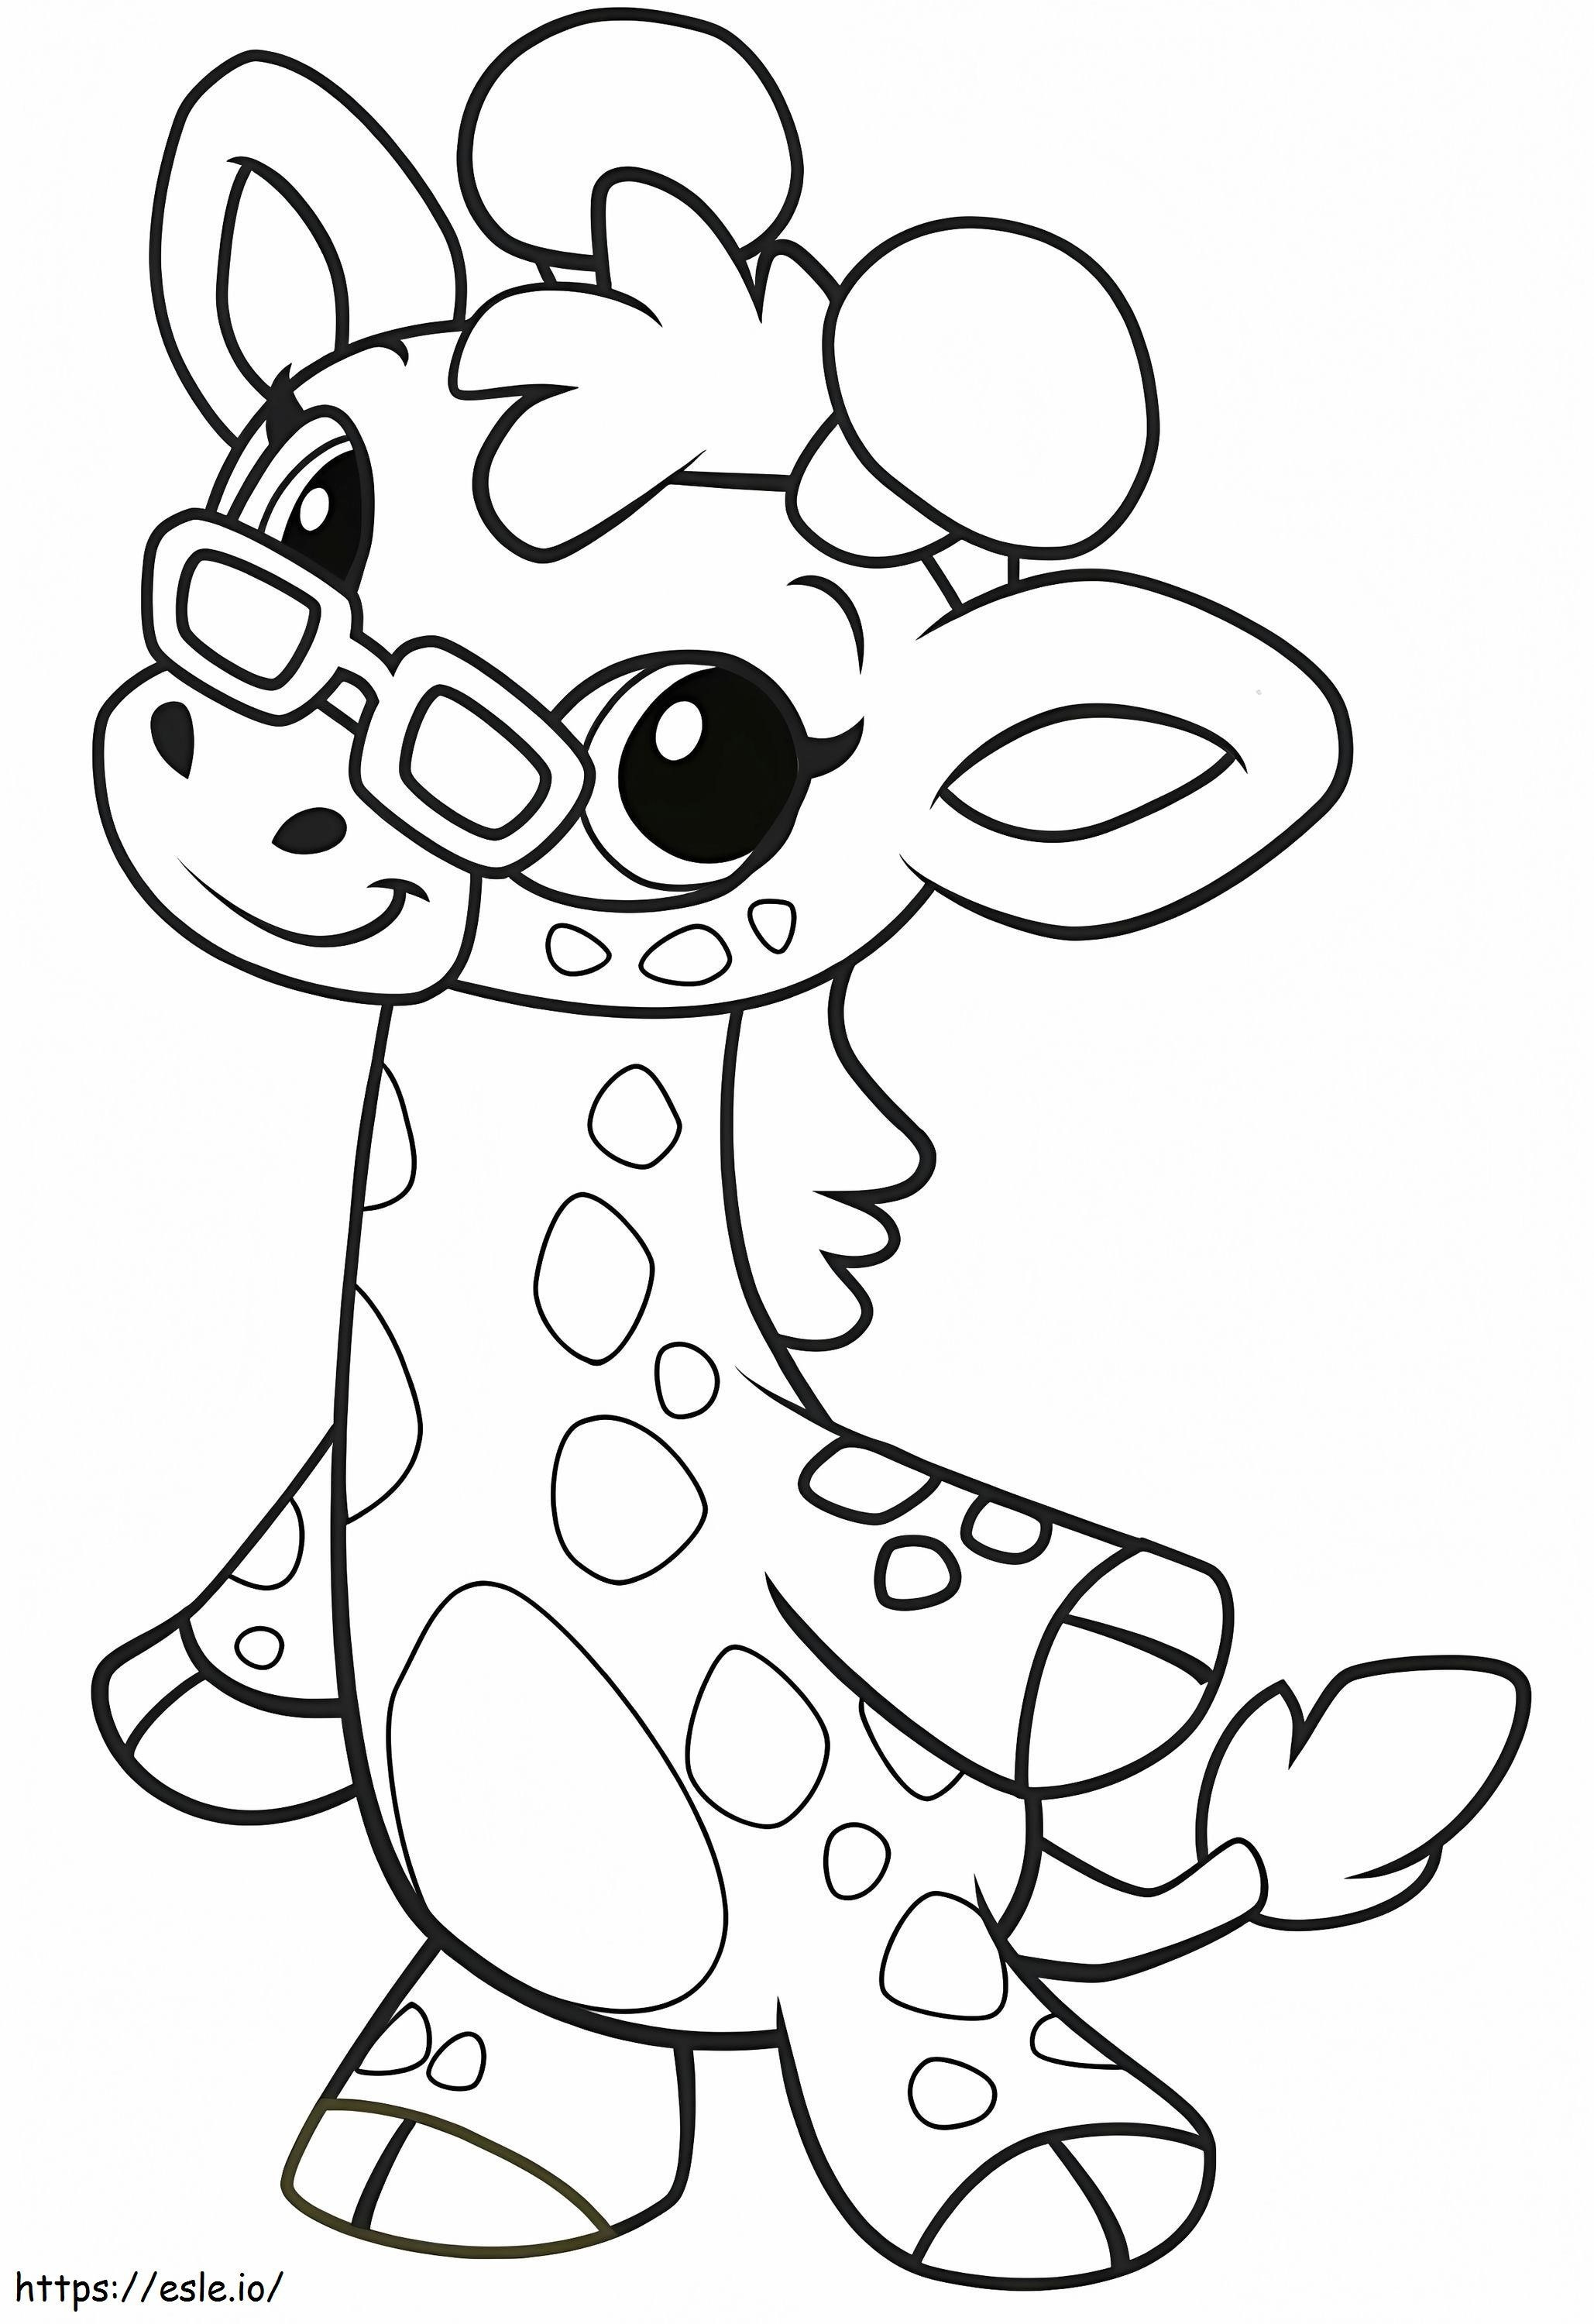 1559988623 Giraffe A4 coloring page